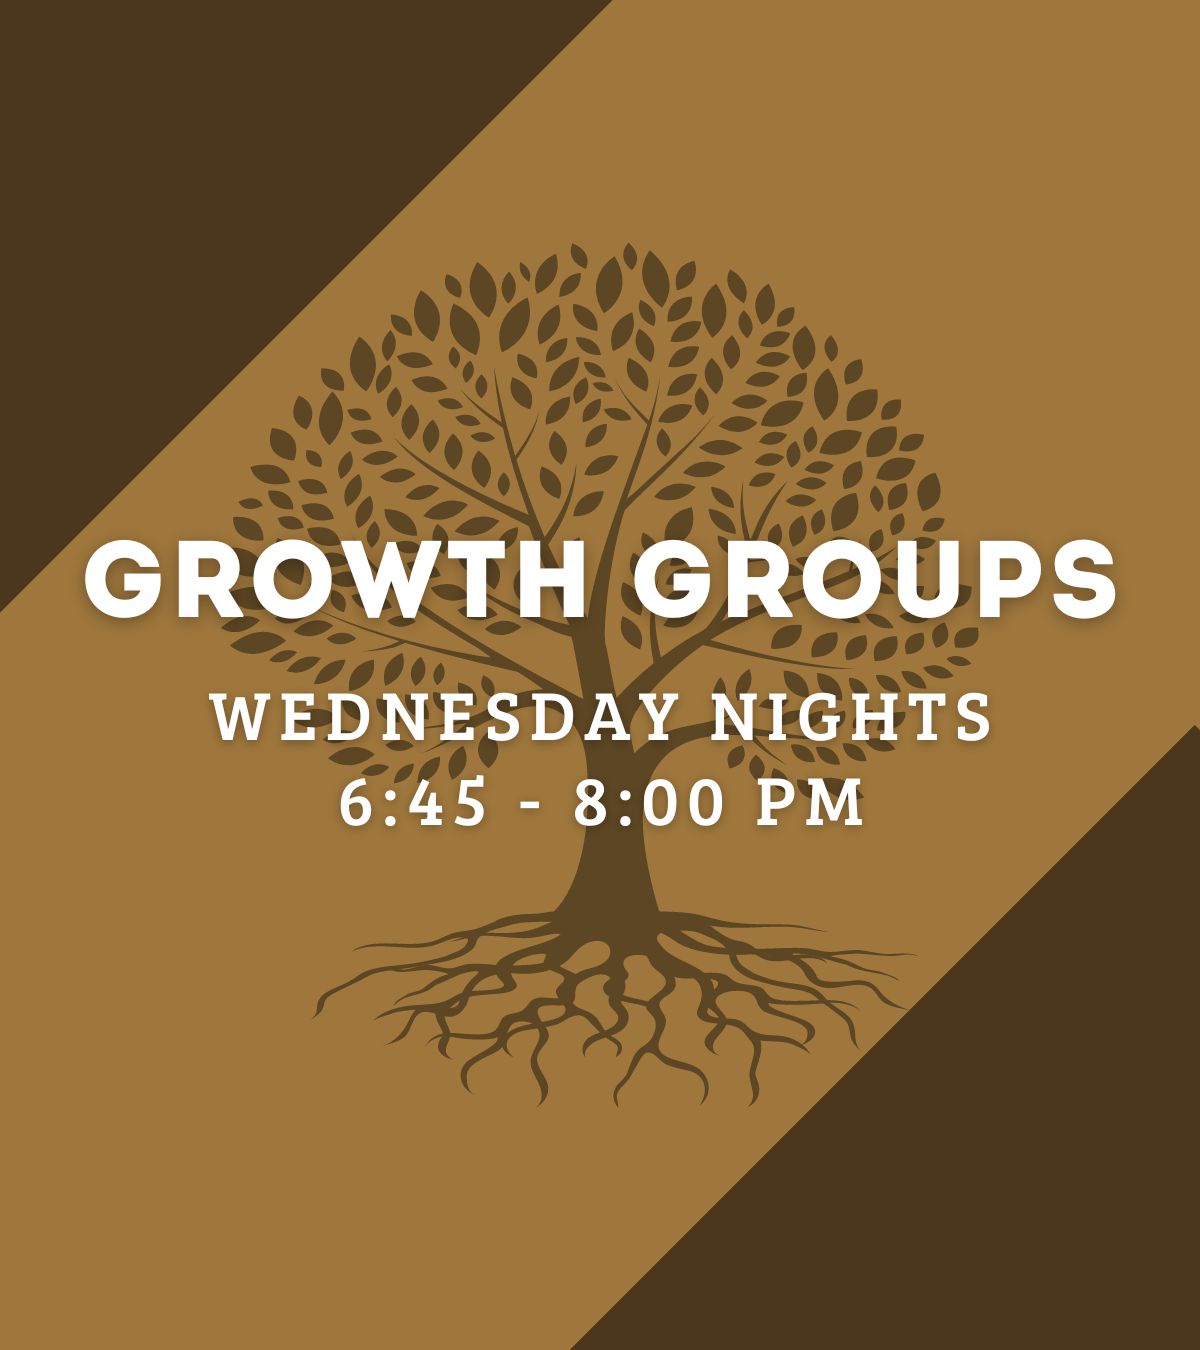 Wednesday Night Growth Groups